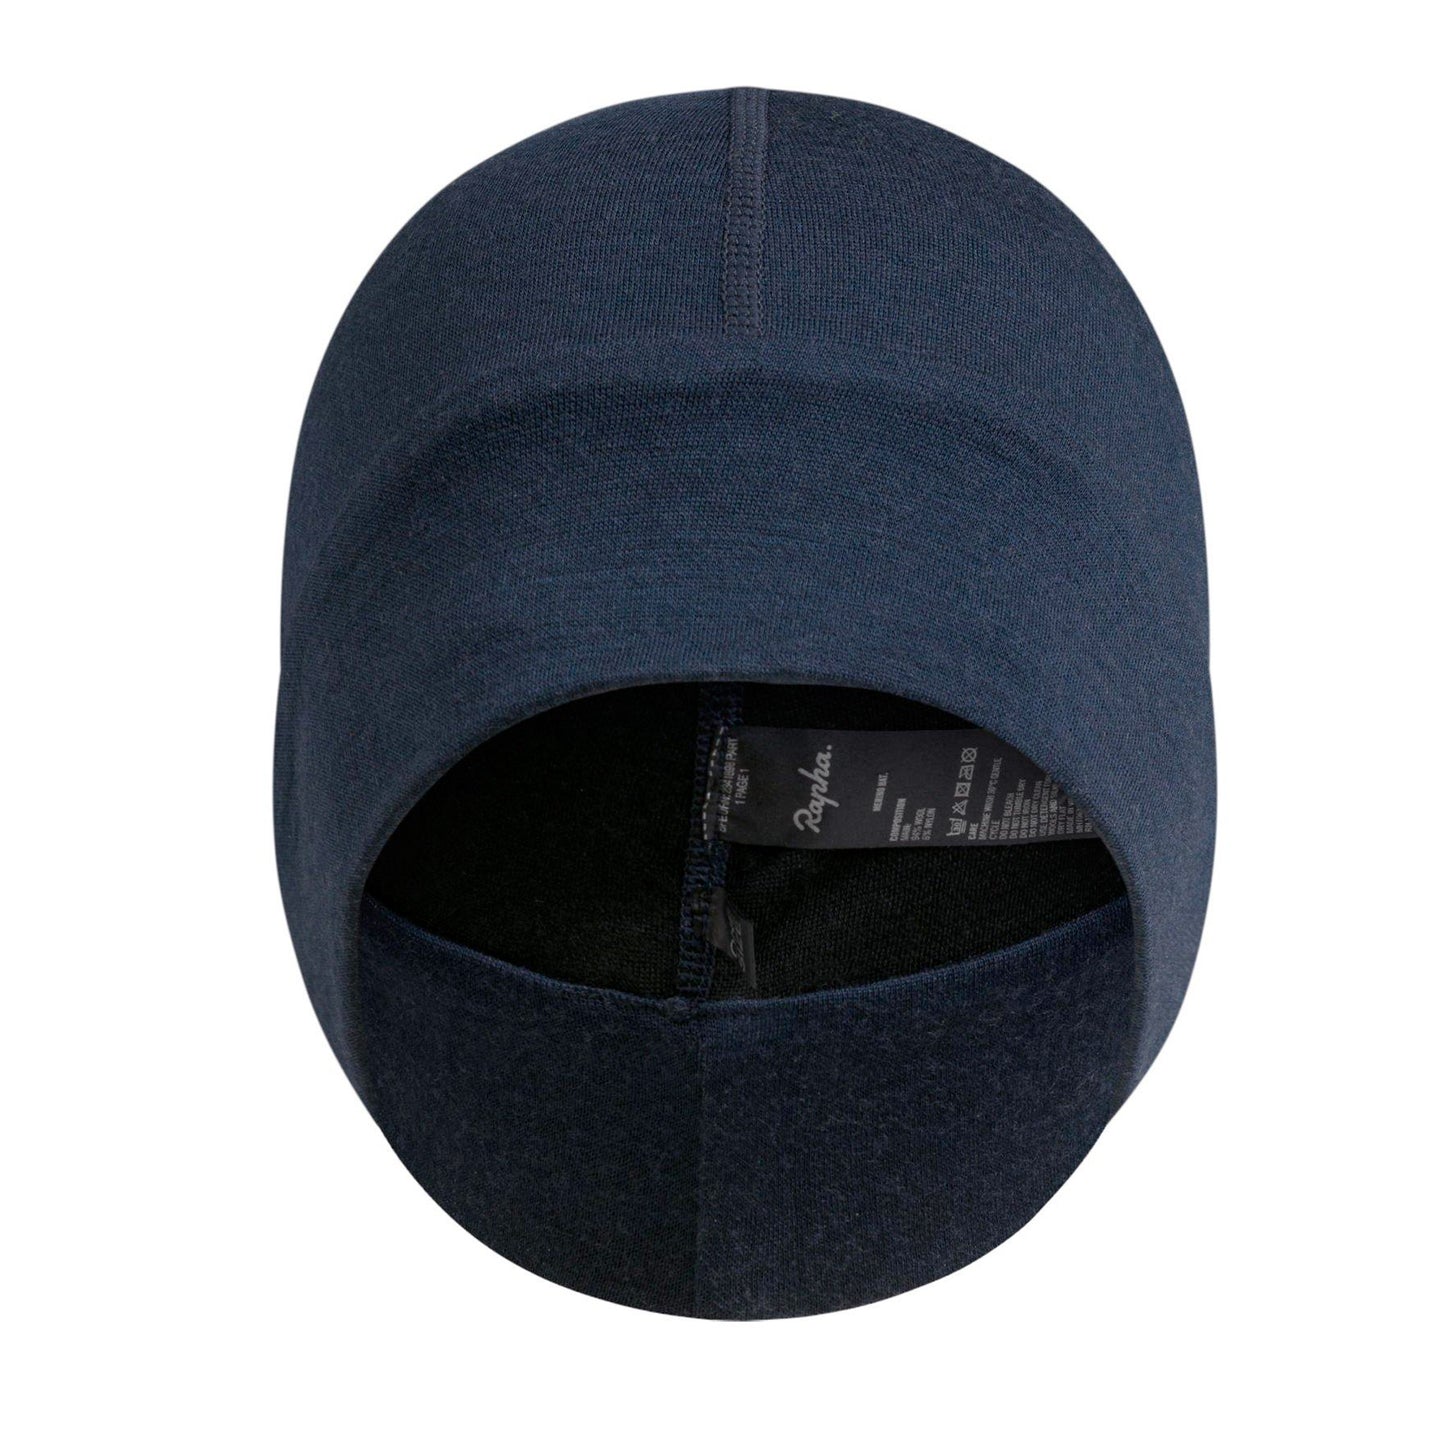 Rapha Unisex Merino Hat - Navy One Size Fits All